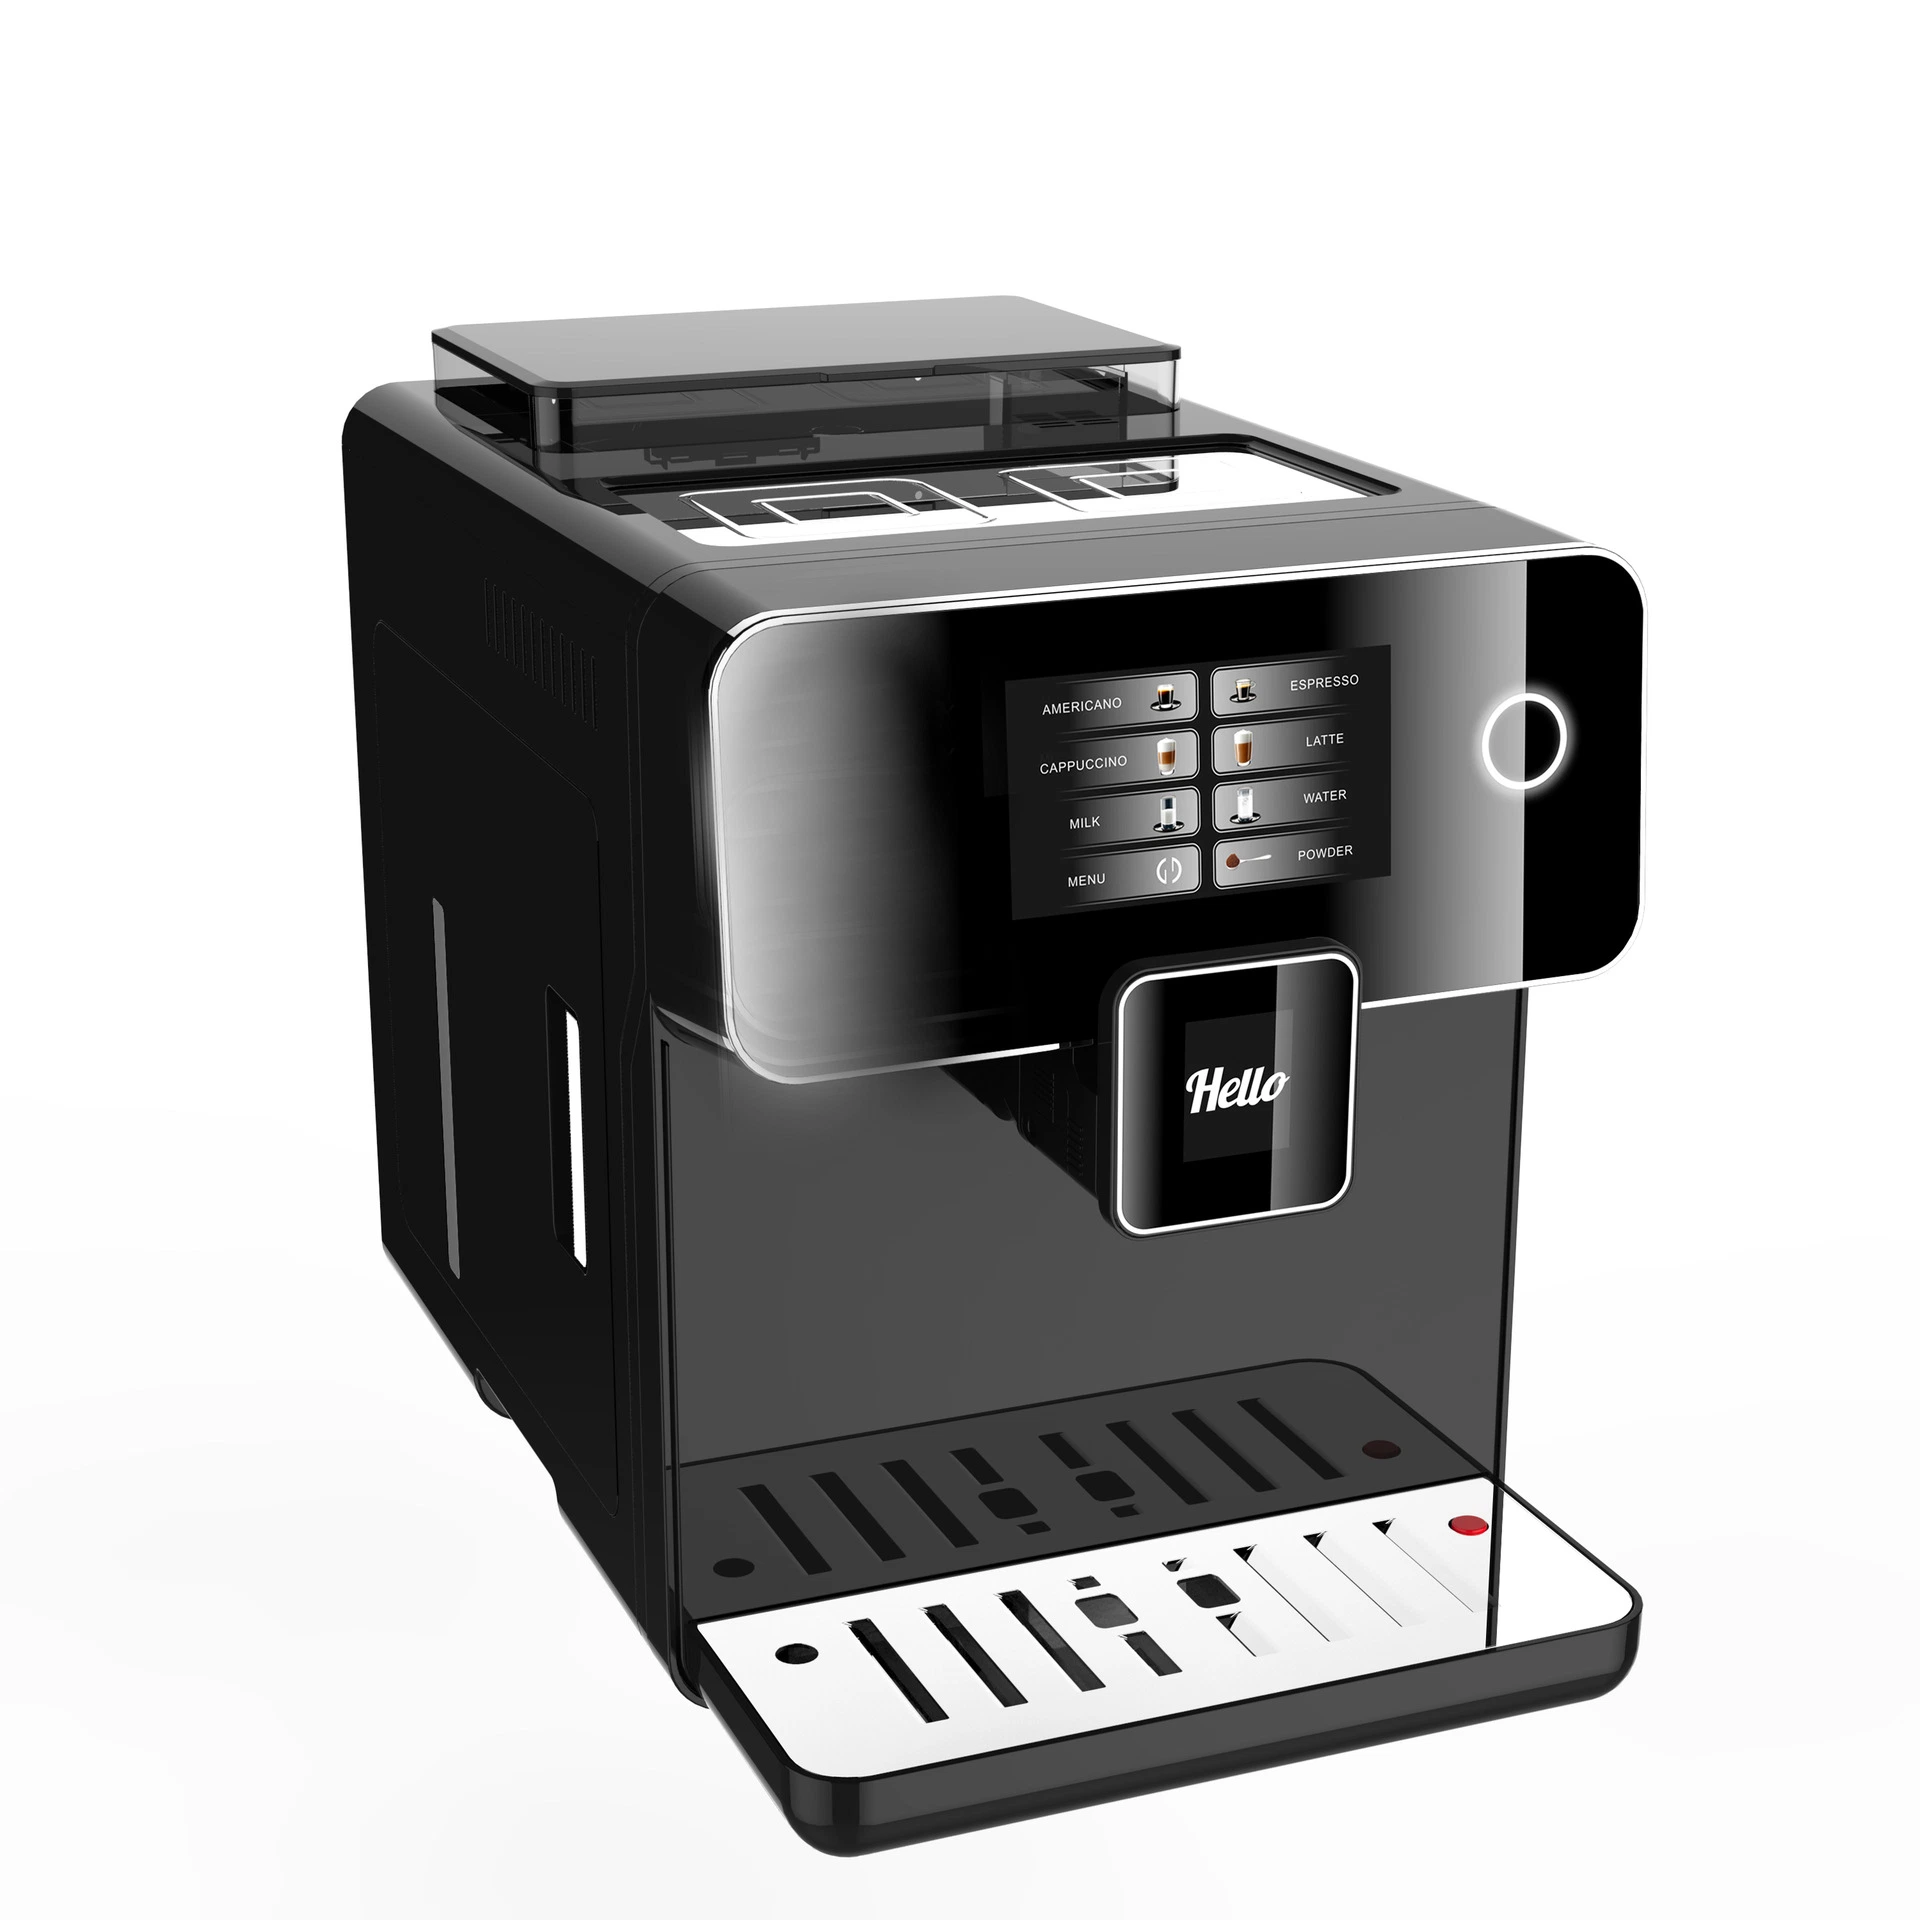 Commercial Fully Automatic Coffee Machine Professional Coffee Maker for Cappuccino/ Latte/ Americano/Espresso/Hot Water/Milk Foam